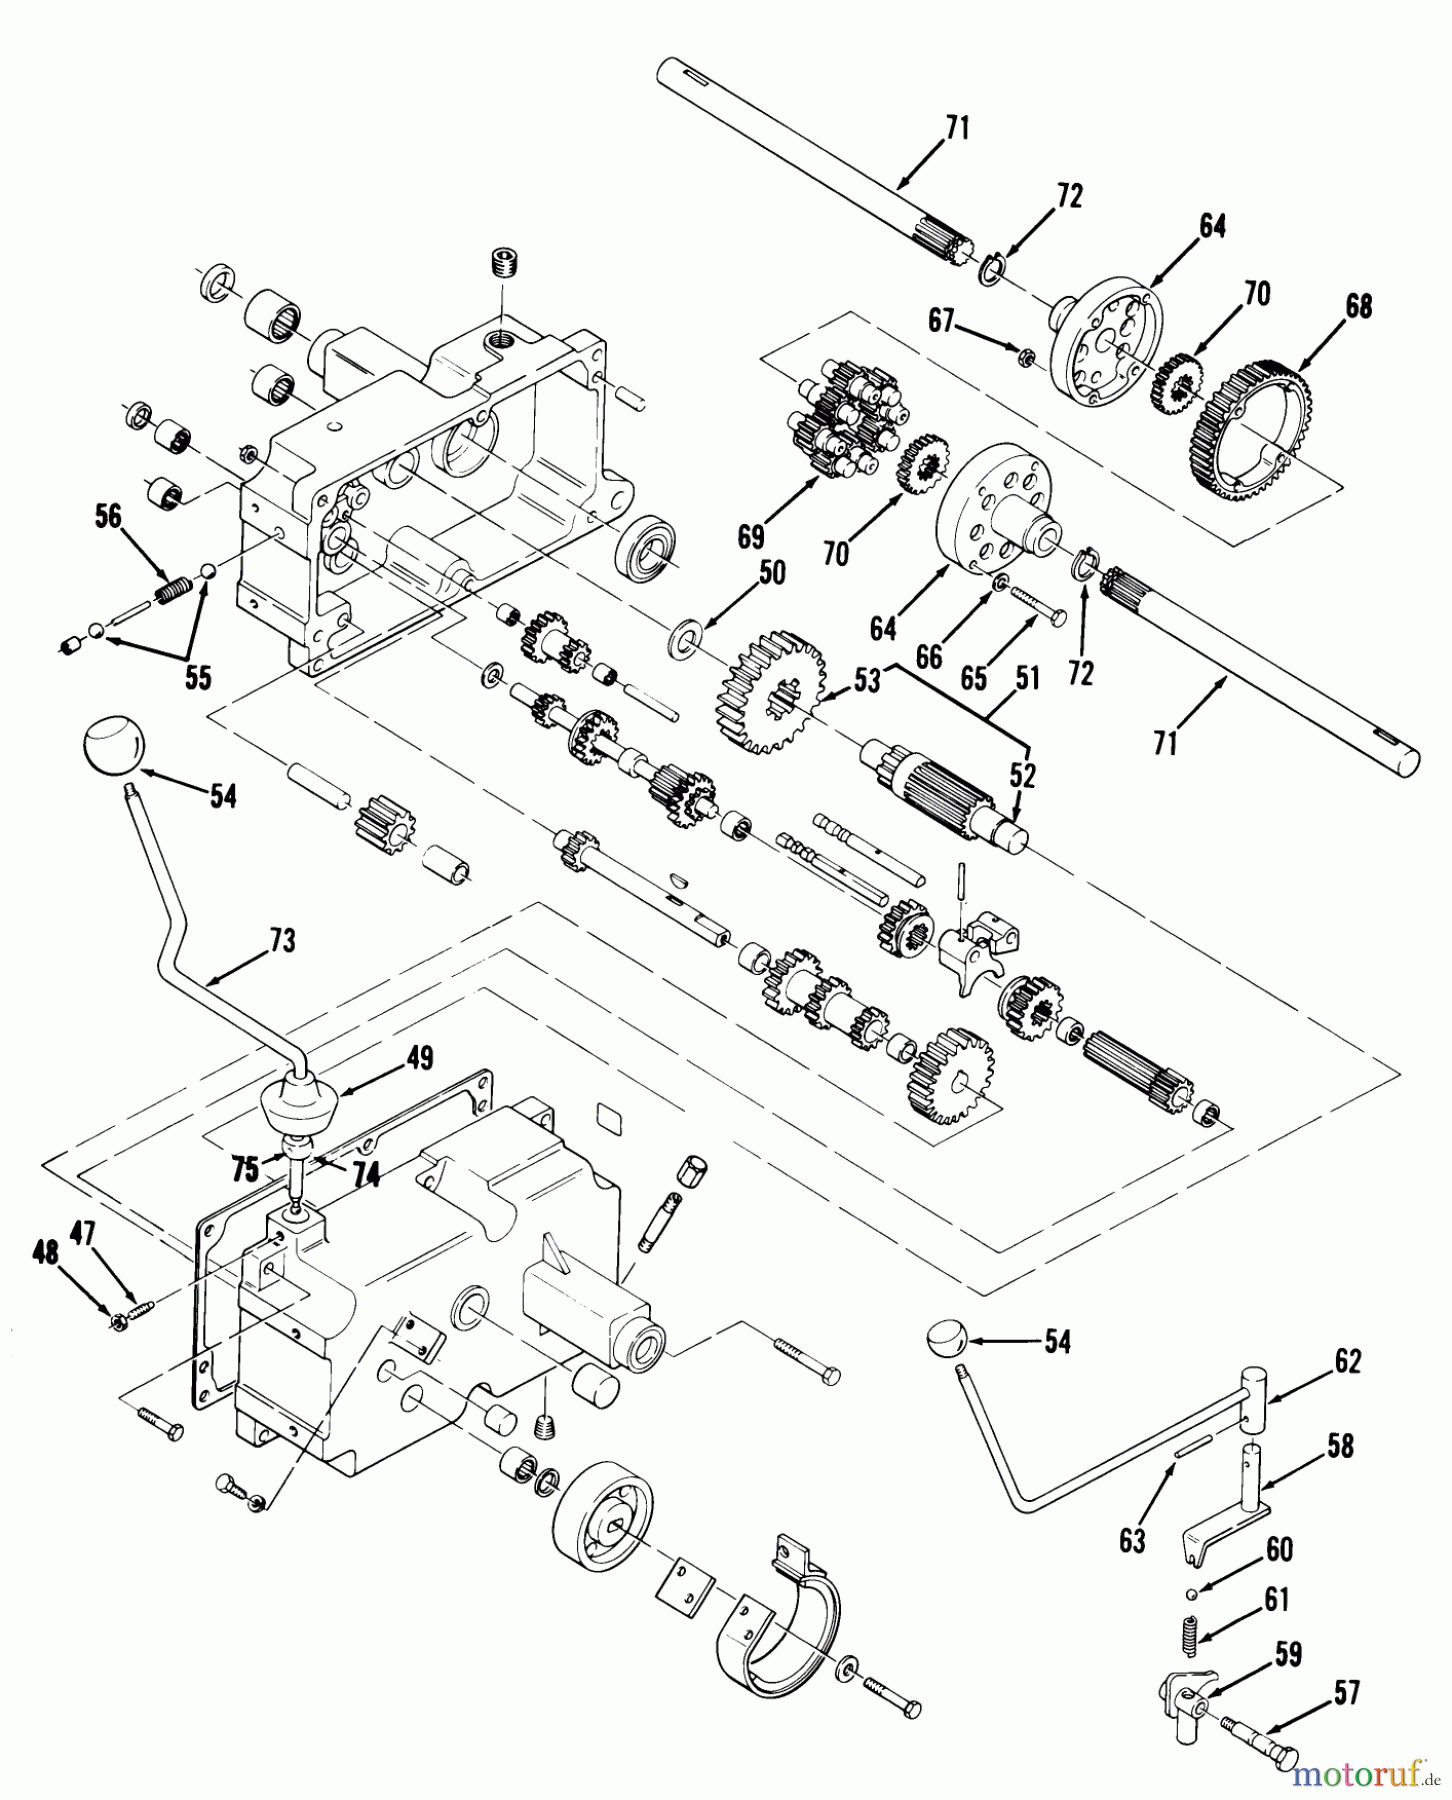  Toro Neu Mowers, Lawn & Garden Tractor Seite 1 01-14E801 (E-141) - Toro E-141 8-Speed Tractor, 1983 MECHANICAL TRANSMISSION-8 SPEED #2